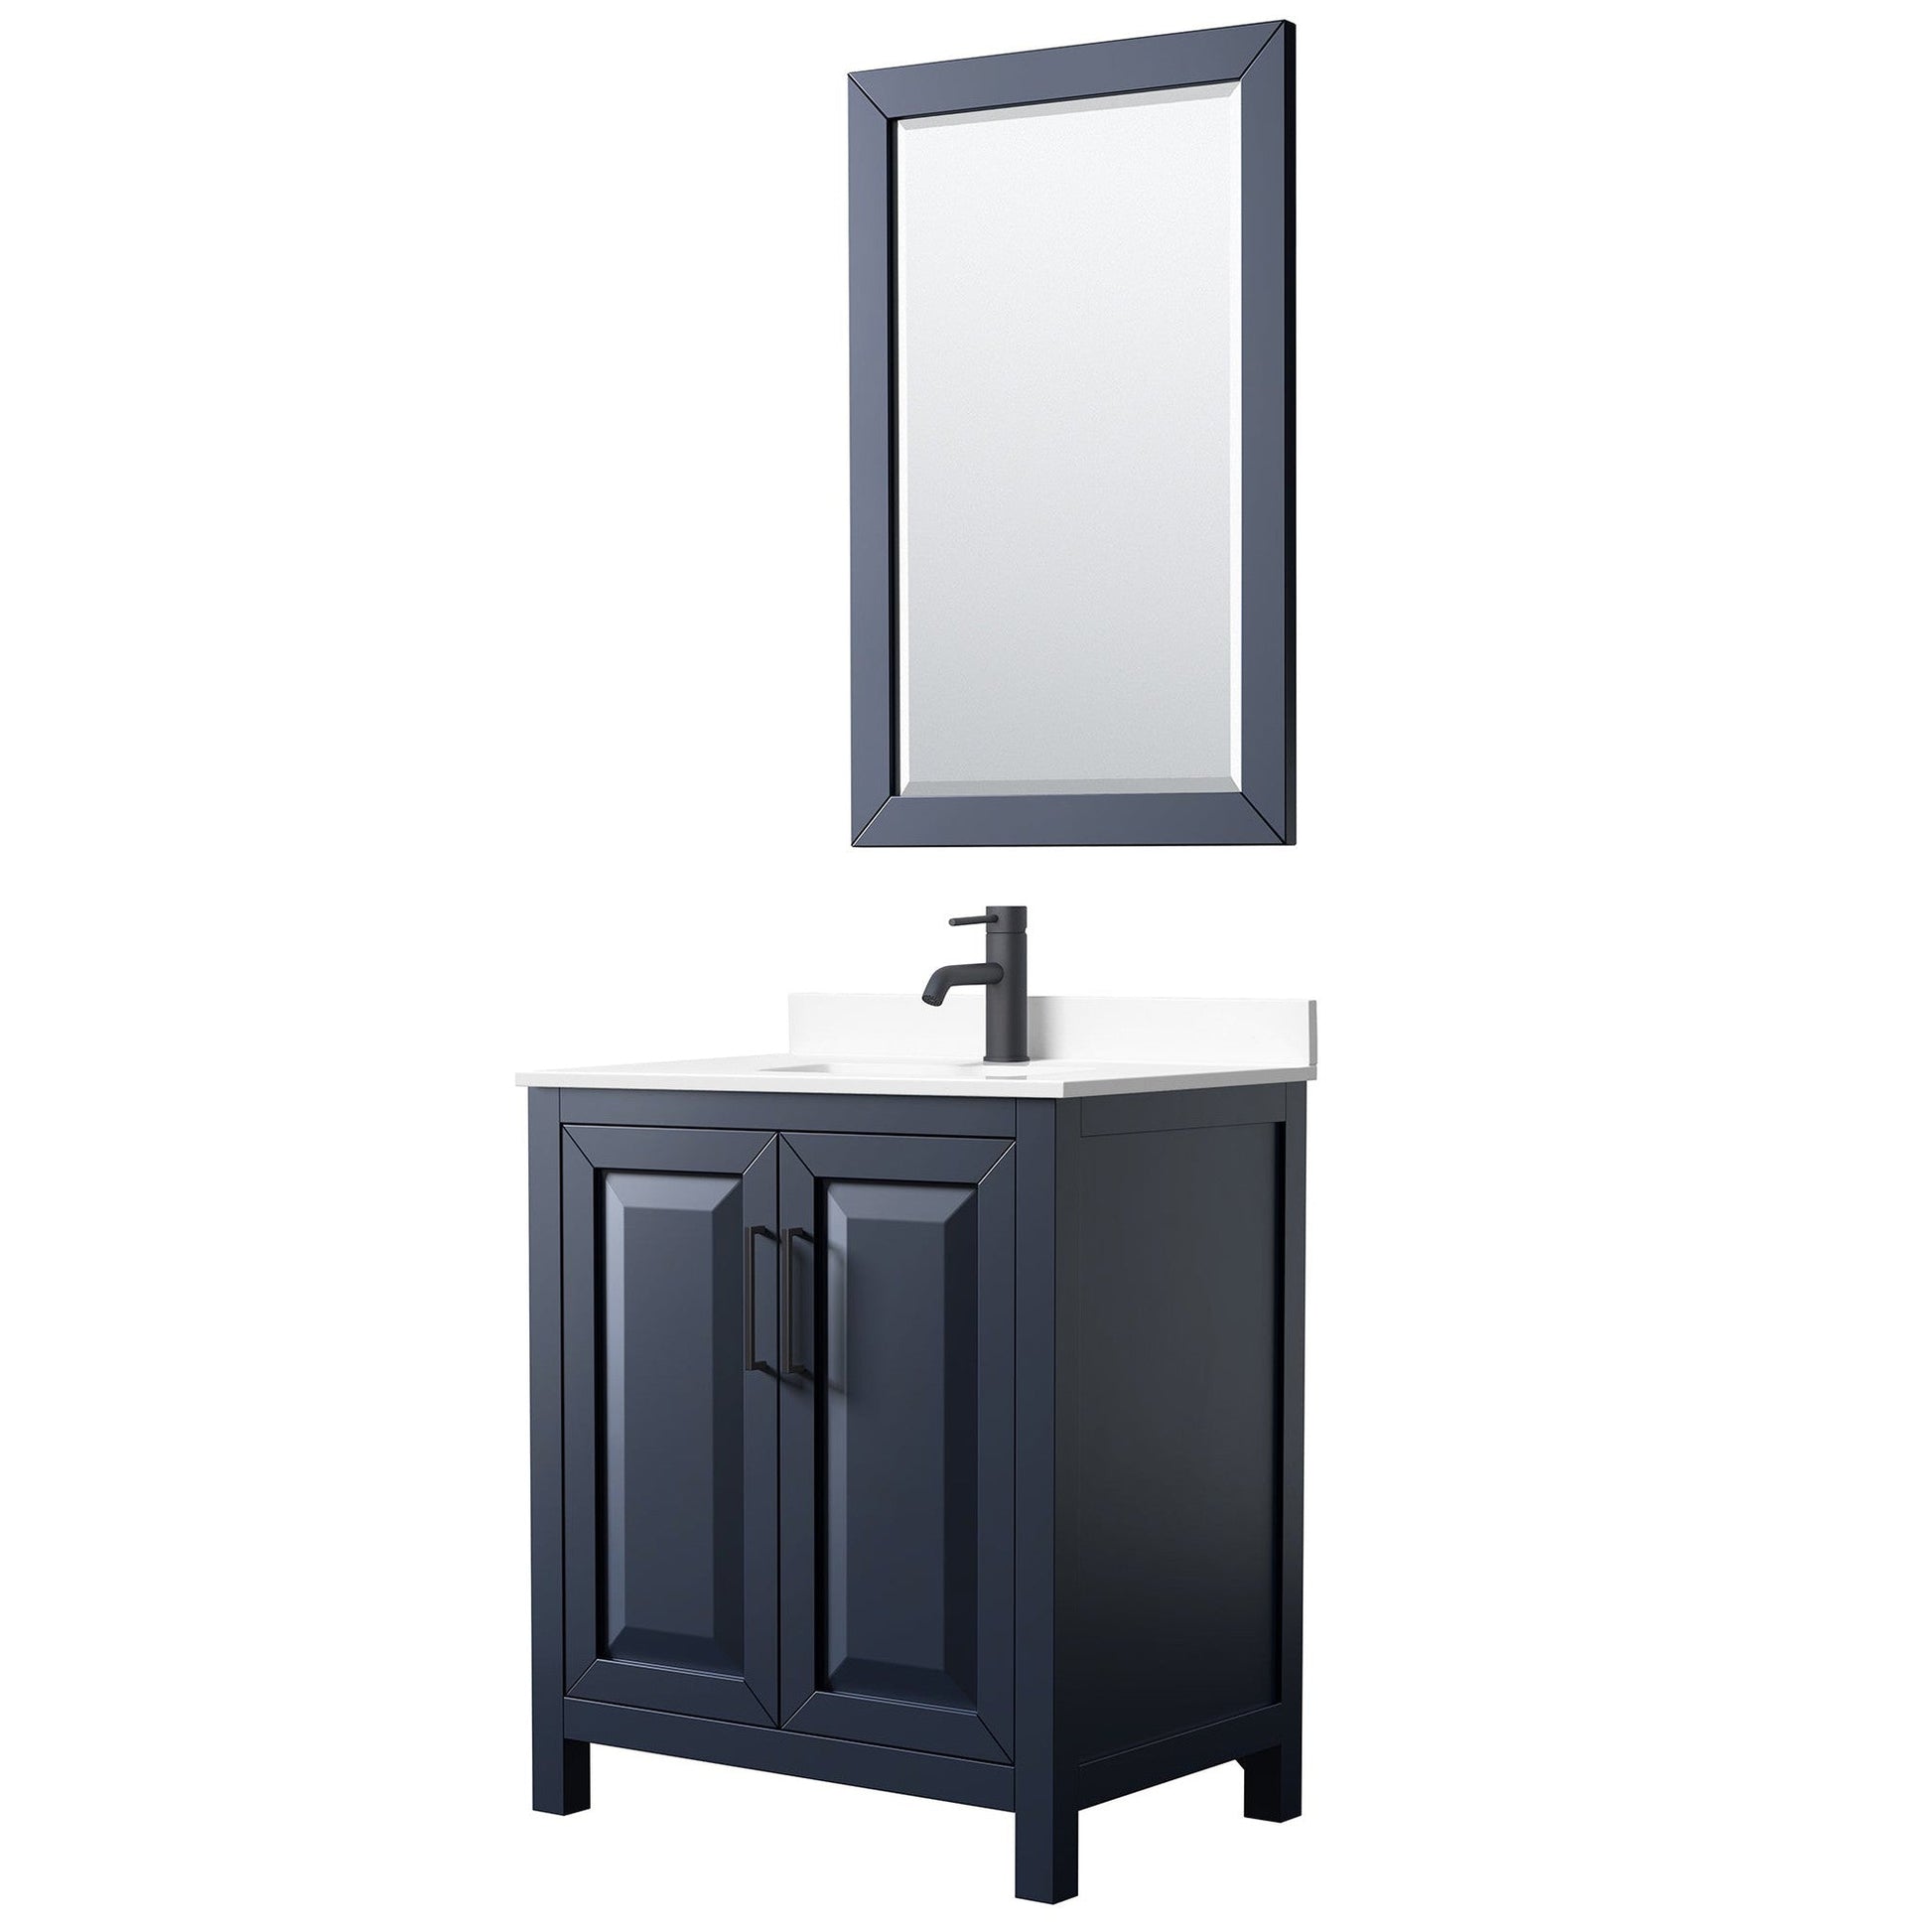 Daria 30" Single Bathroom Vanity in Dark Blue, White Cultured Marble Countertop, Undermount Square Sink, Matte Black Trim, 24" Mirror